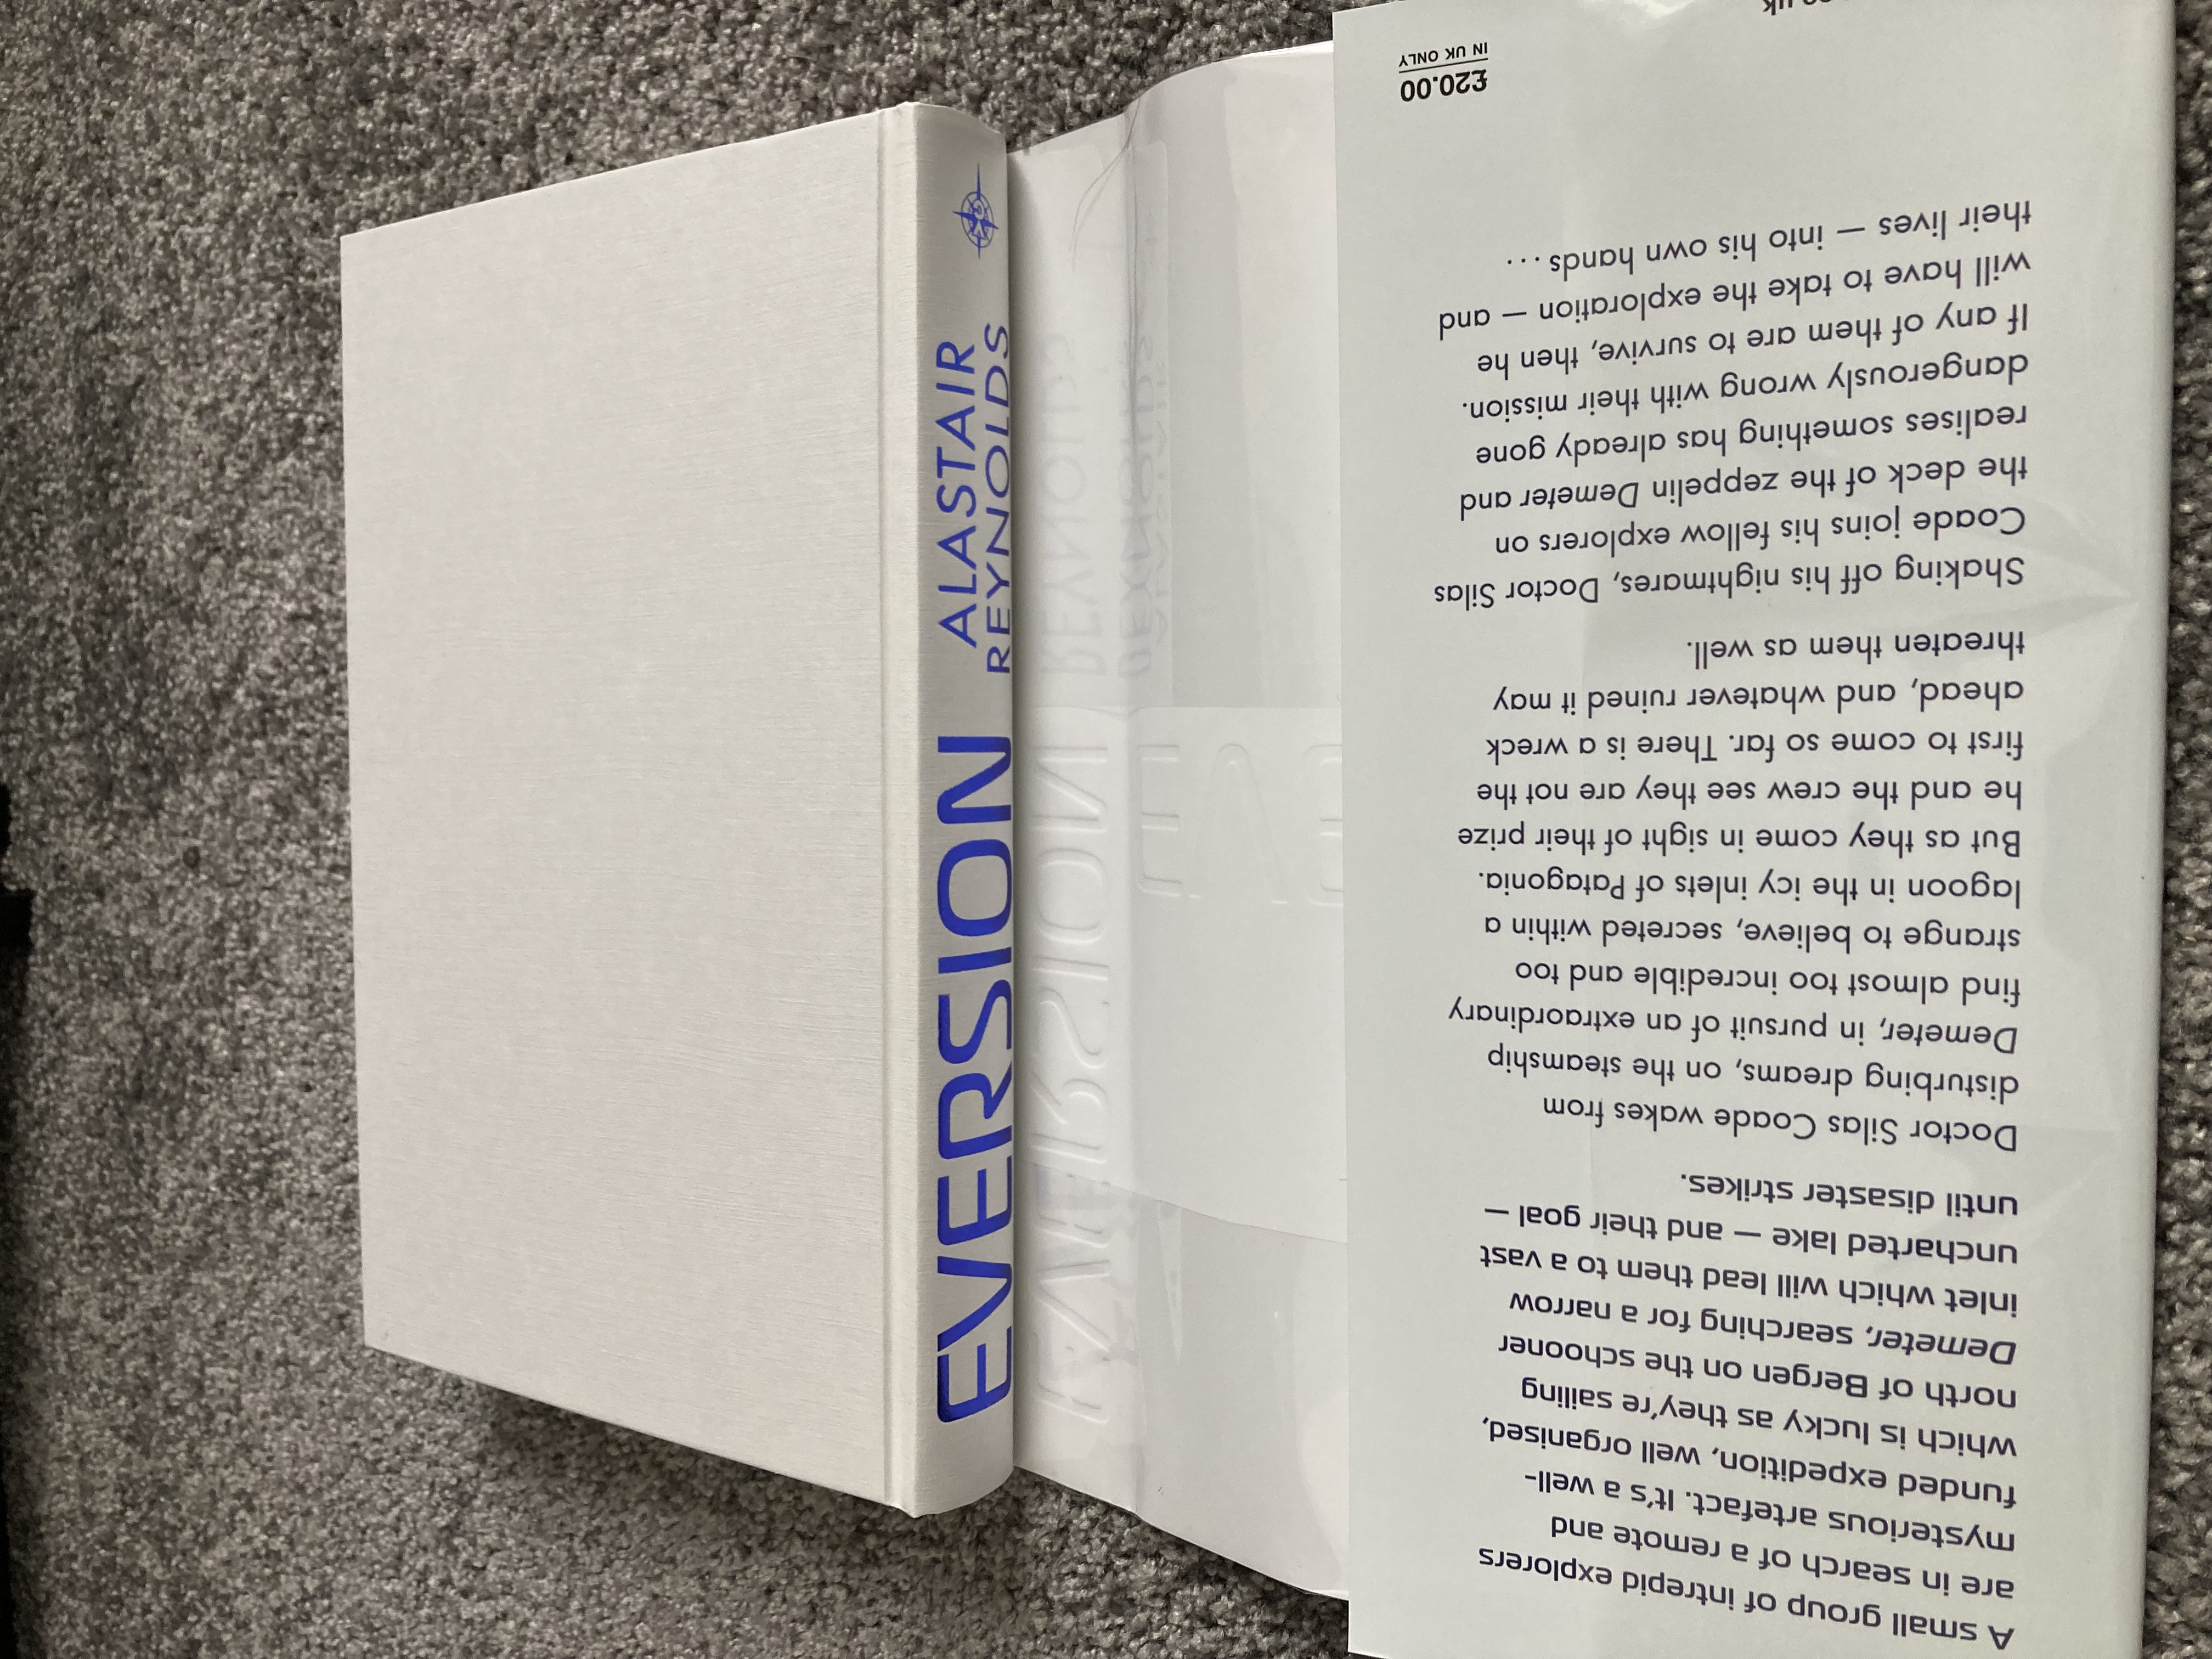 Eversion by Alastair Reynolds (ebook)